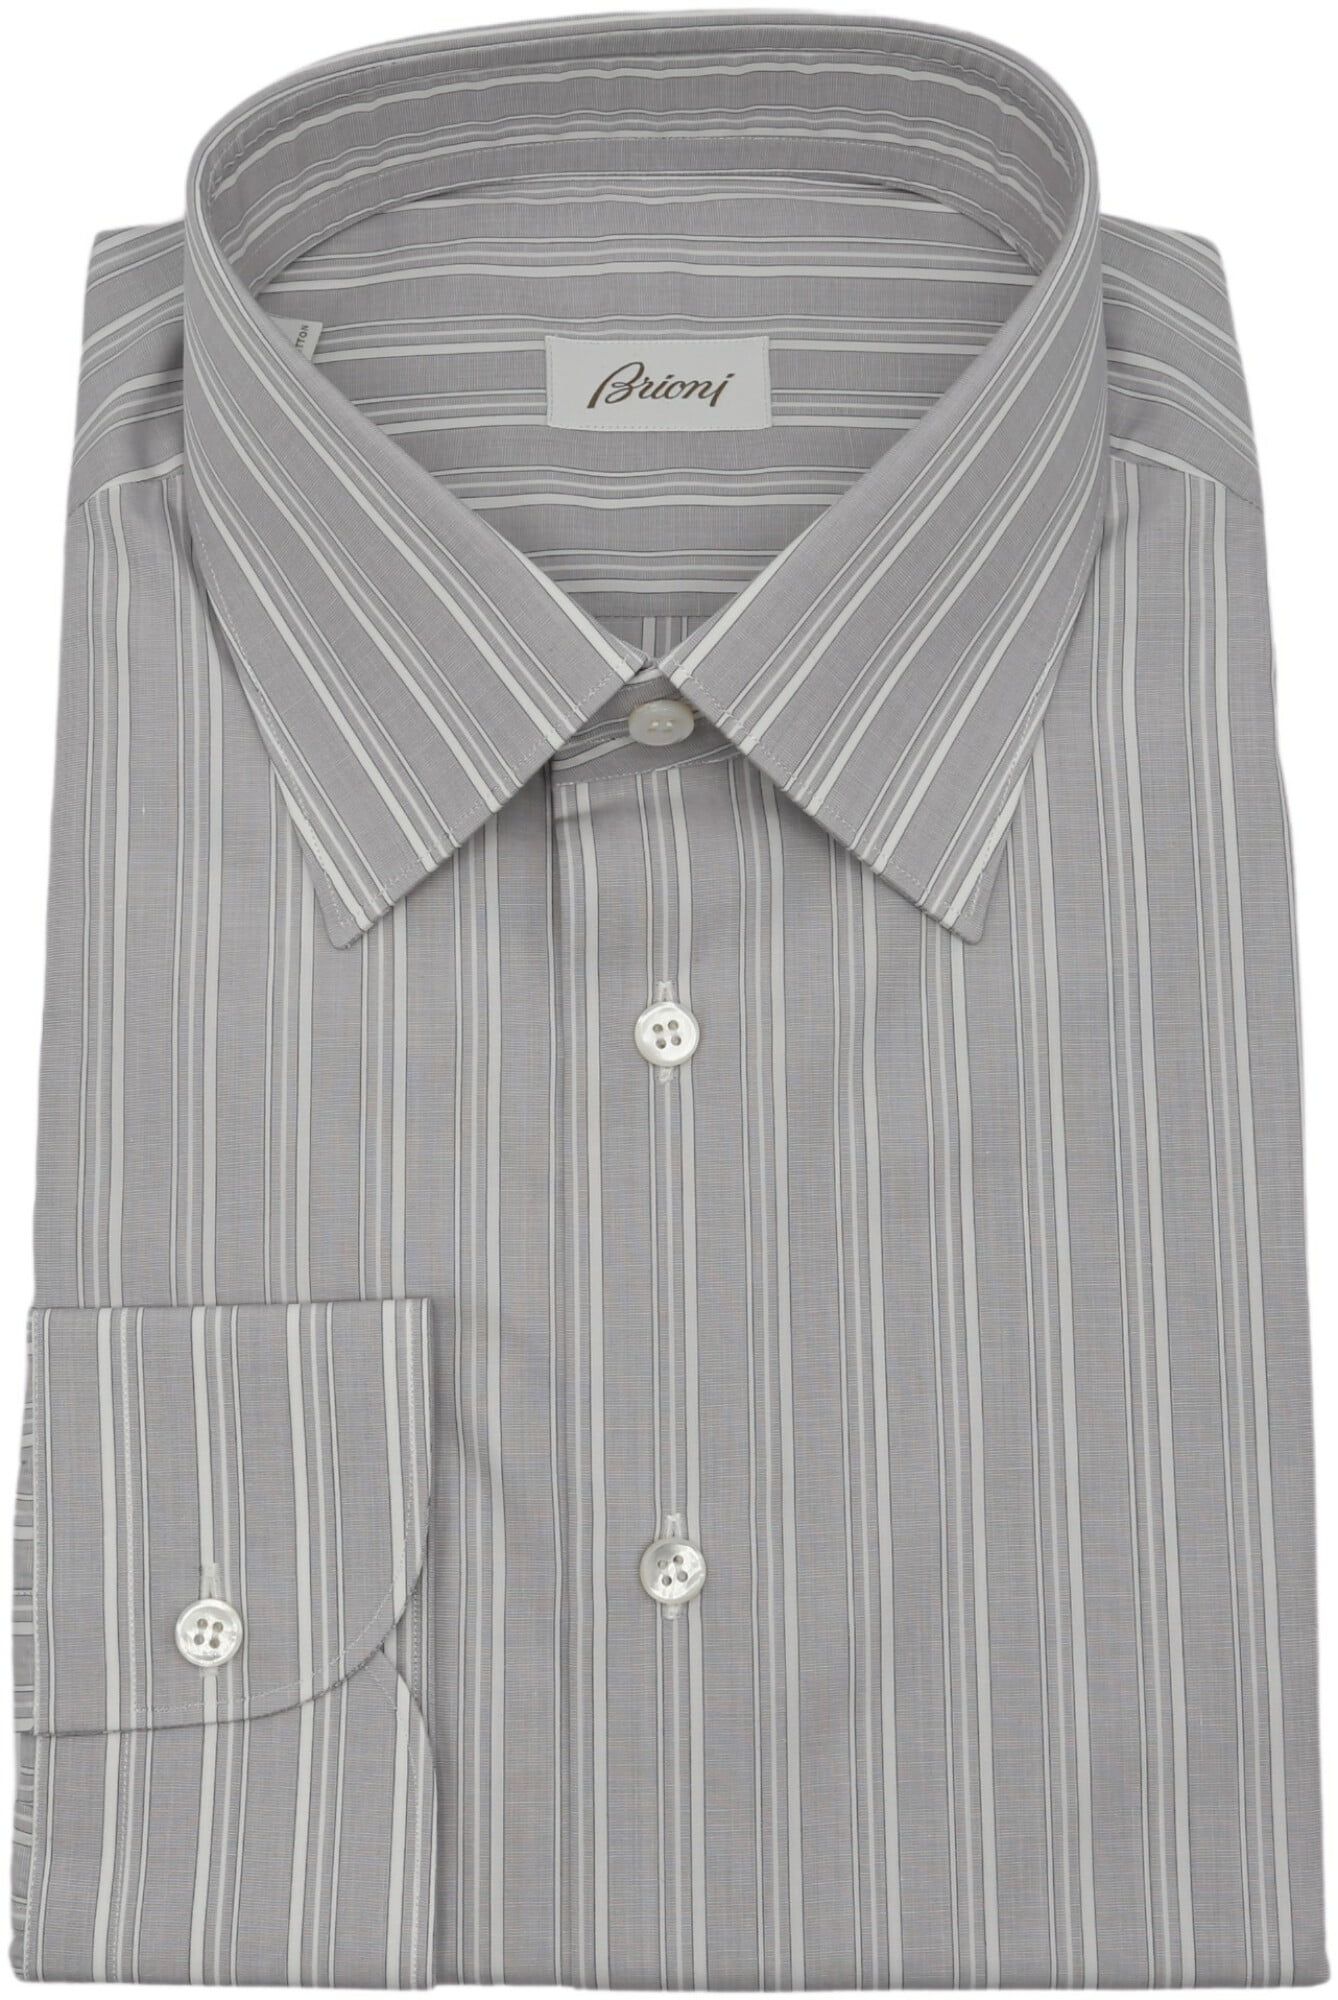 Brioni Men's Grey / White Striped Dress Shirt - 43-17 (Xl) - Walmart.com